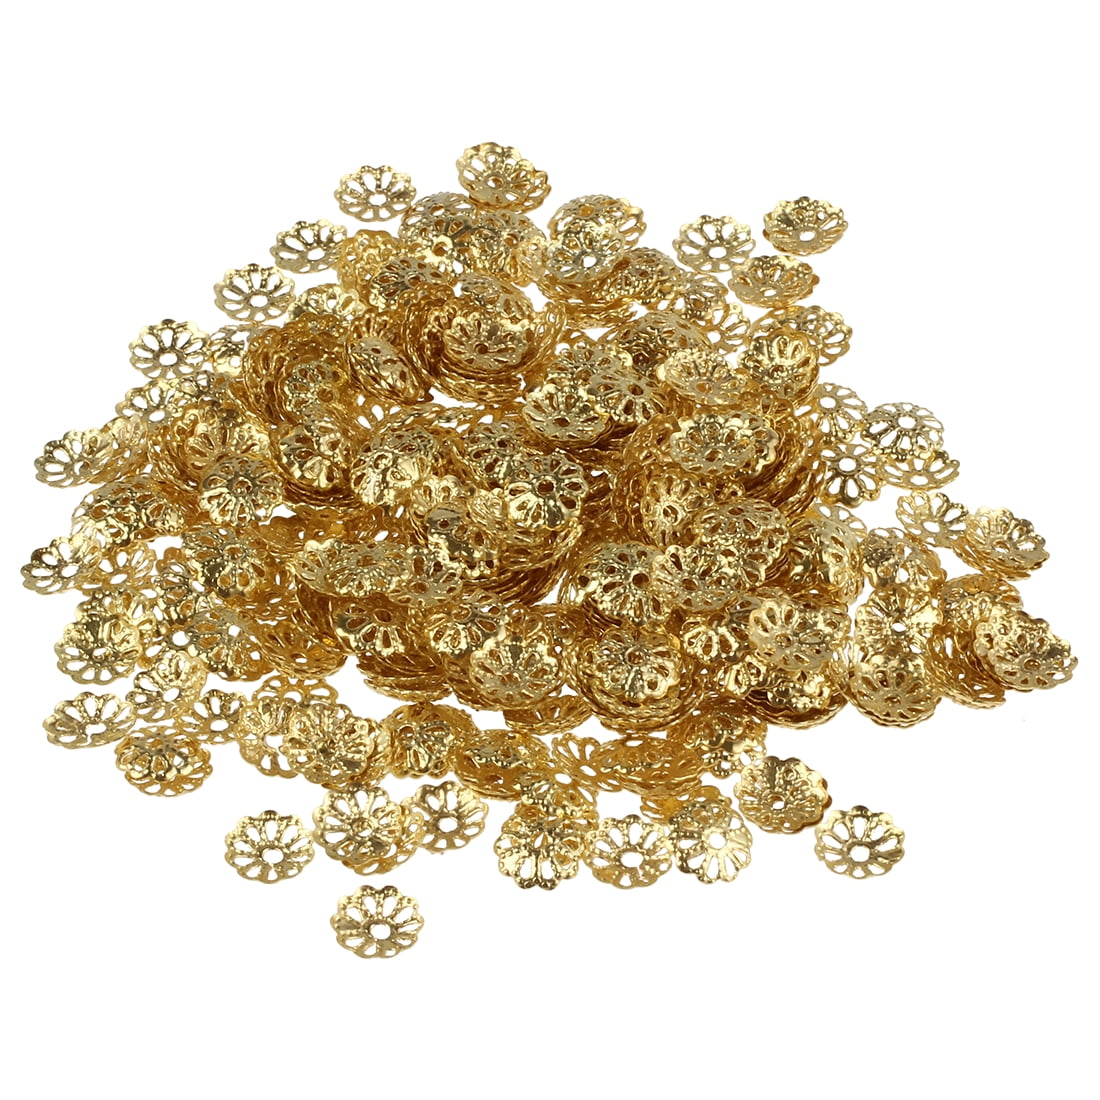 500pcs 6mm Gold Tone Flower Bead Caps for Jewelry Making K5B4 